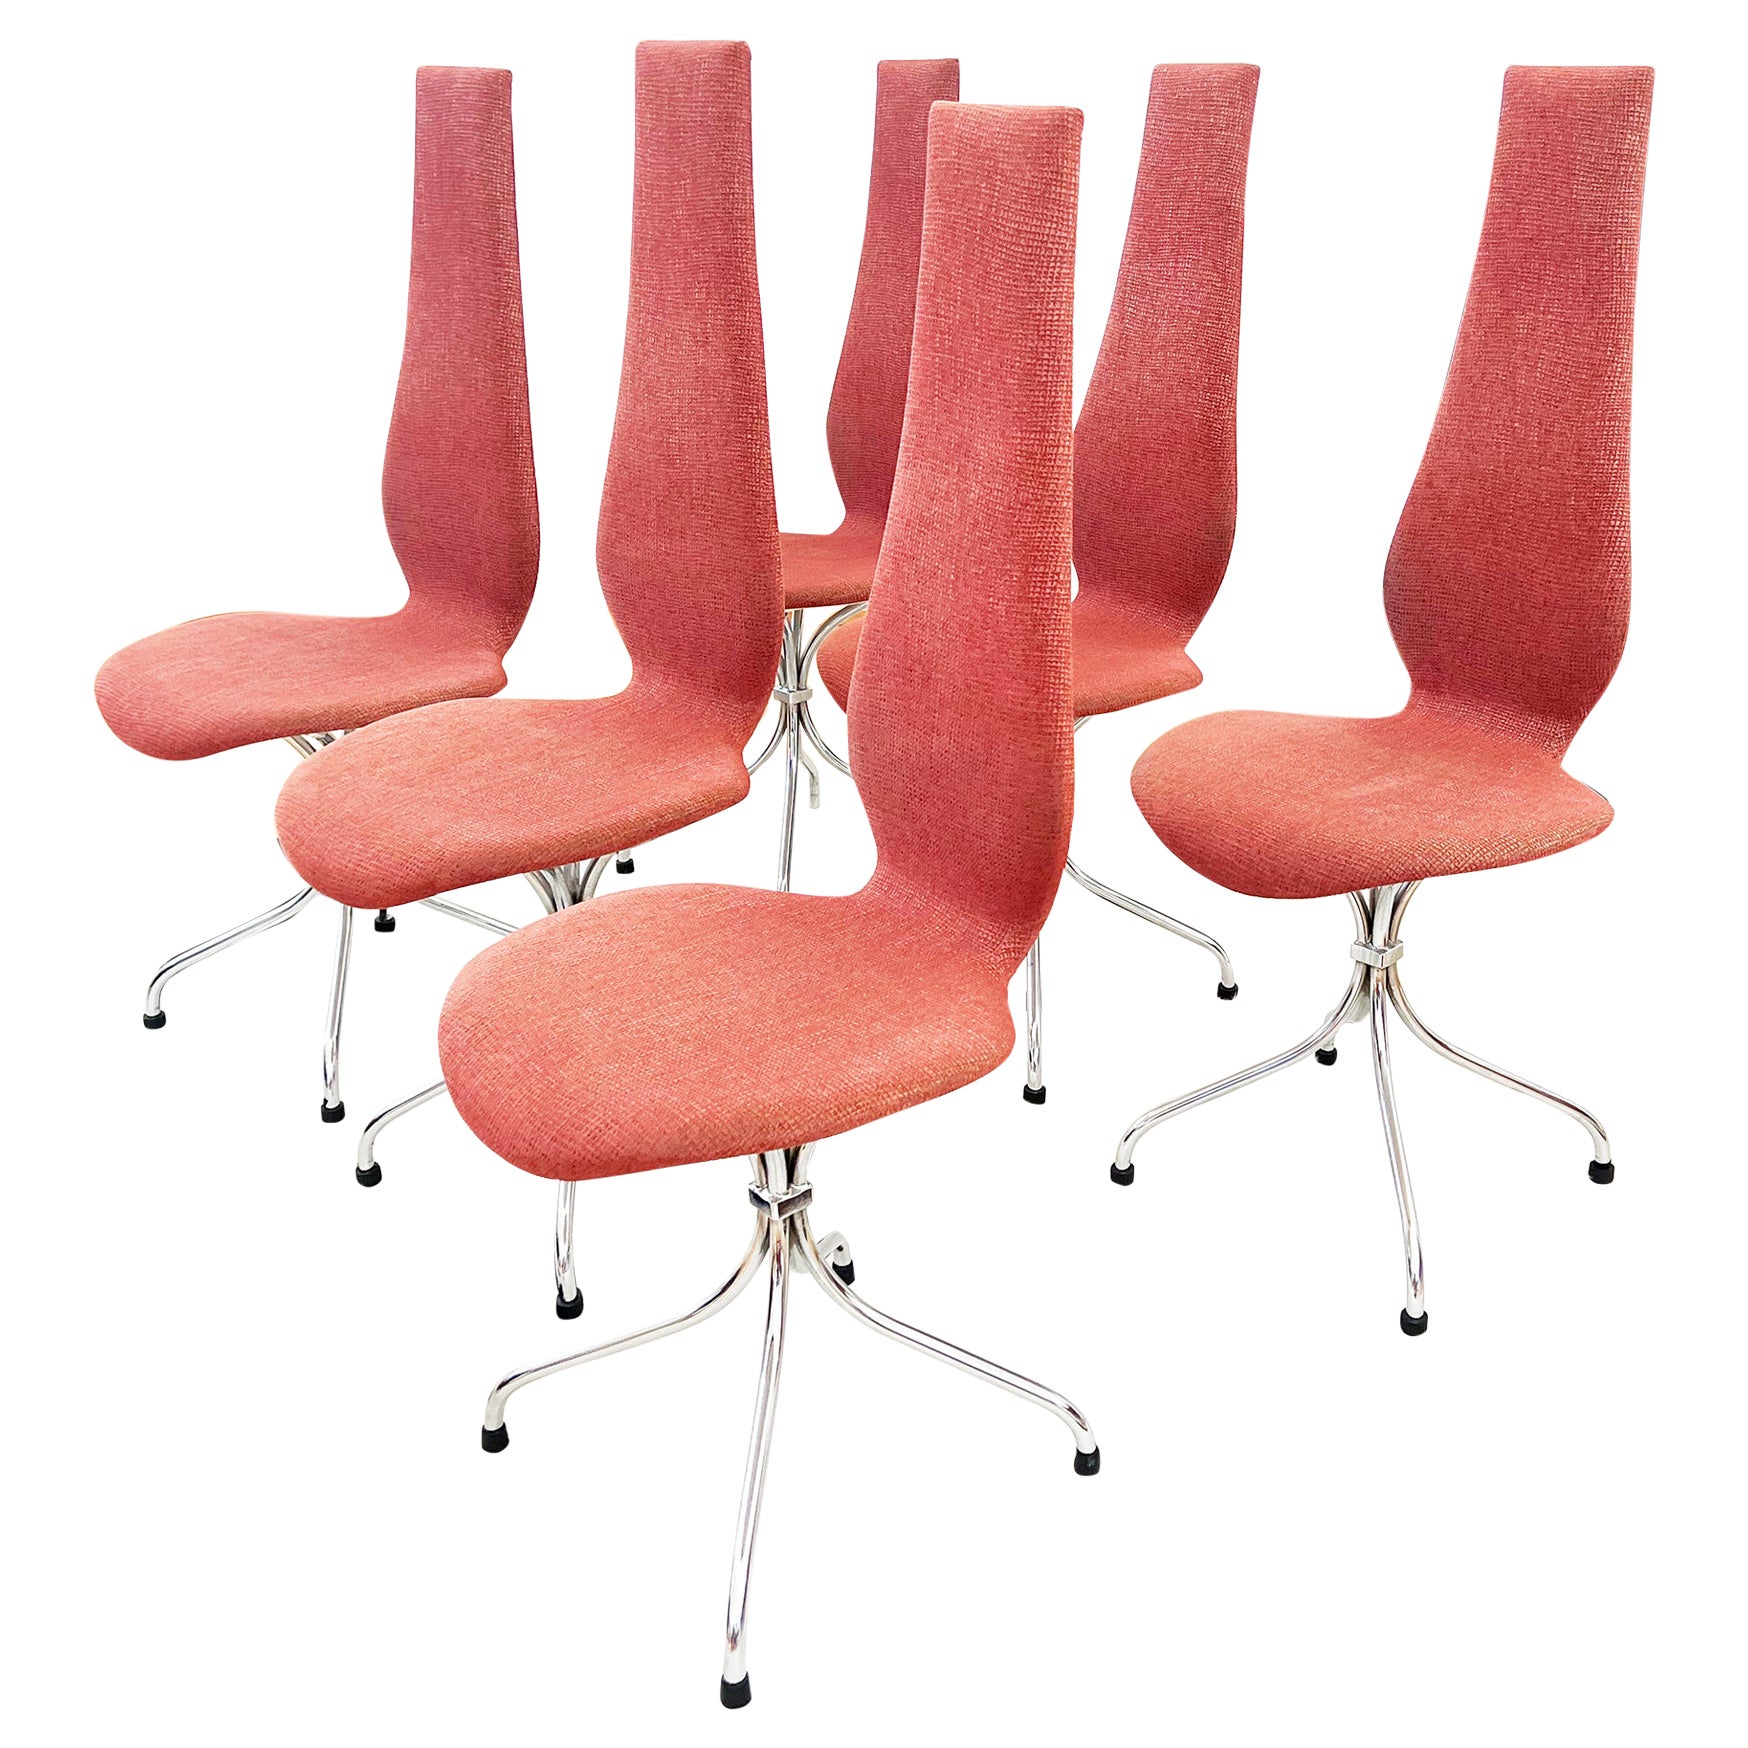 Six chaises de salle à manger en argent corail Theo Häberli Switzerland Mid-Century Modern 1960s